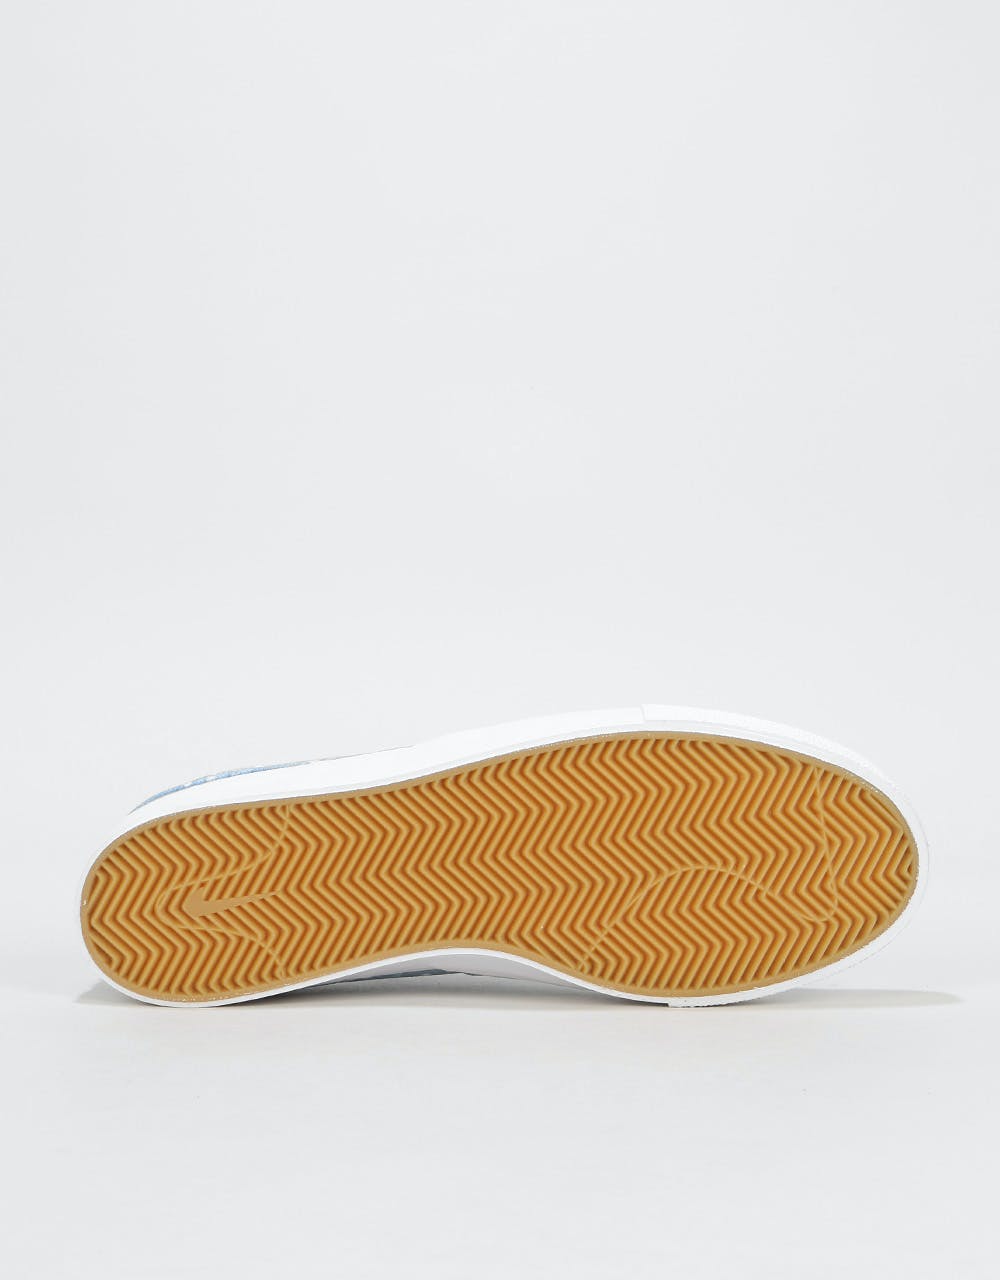 Nike SB Zoom Janoski Slip RM Canvas Skate Shoes - Lt Armory Blue/White